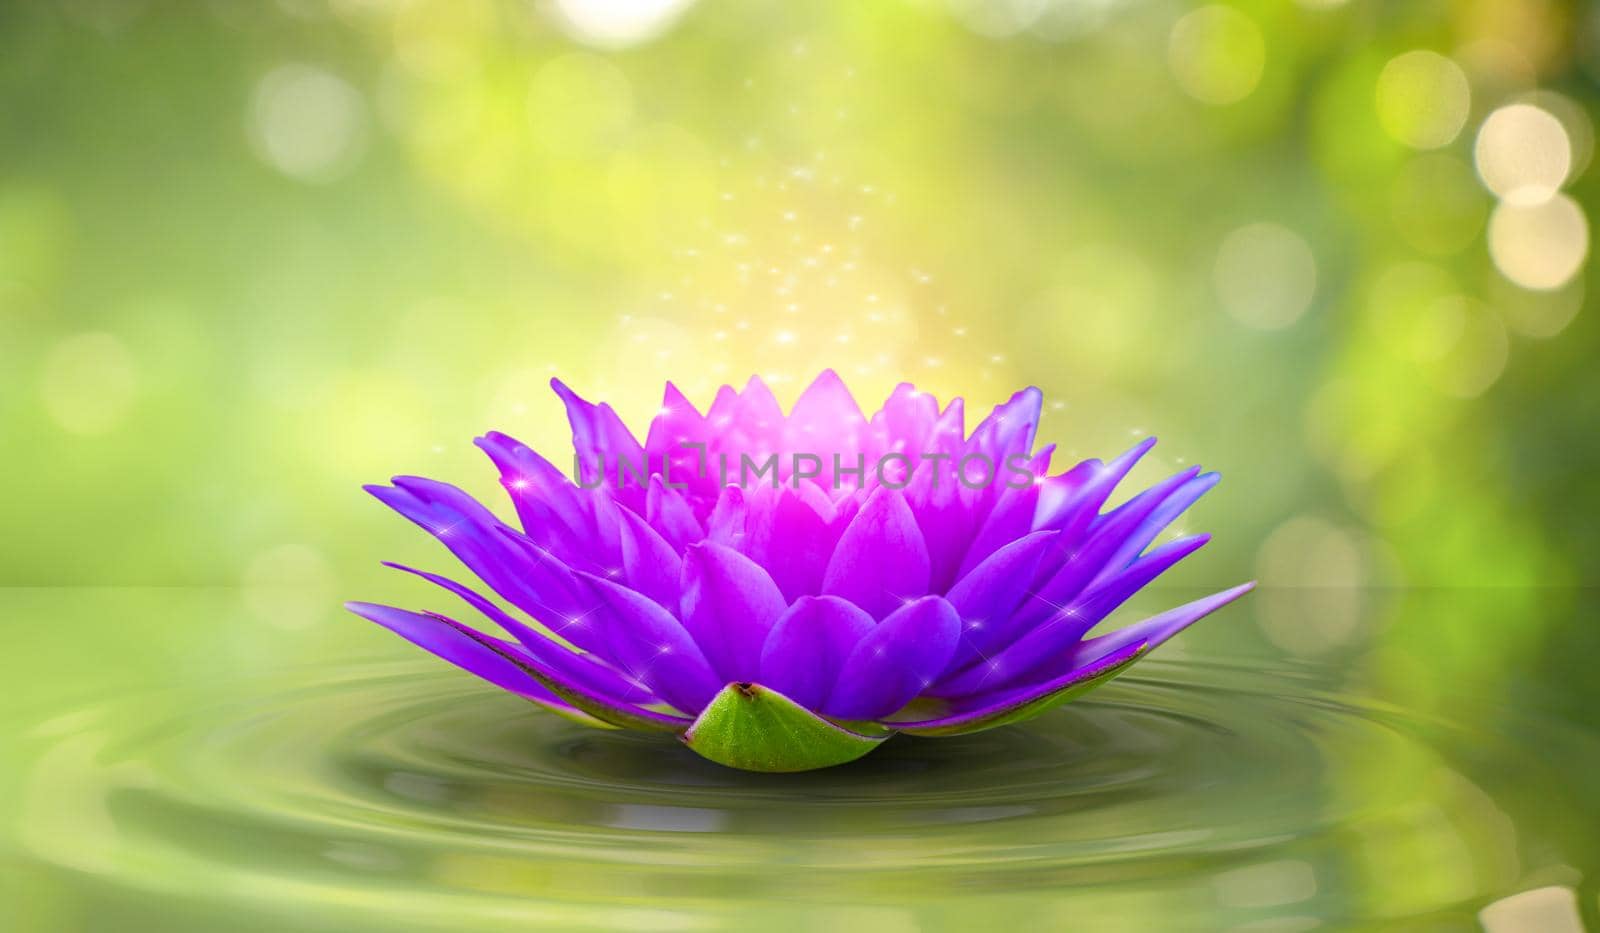 lotus white light purple floating light sparkle background